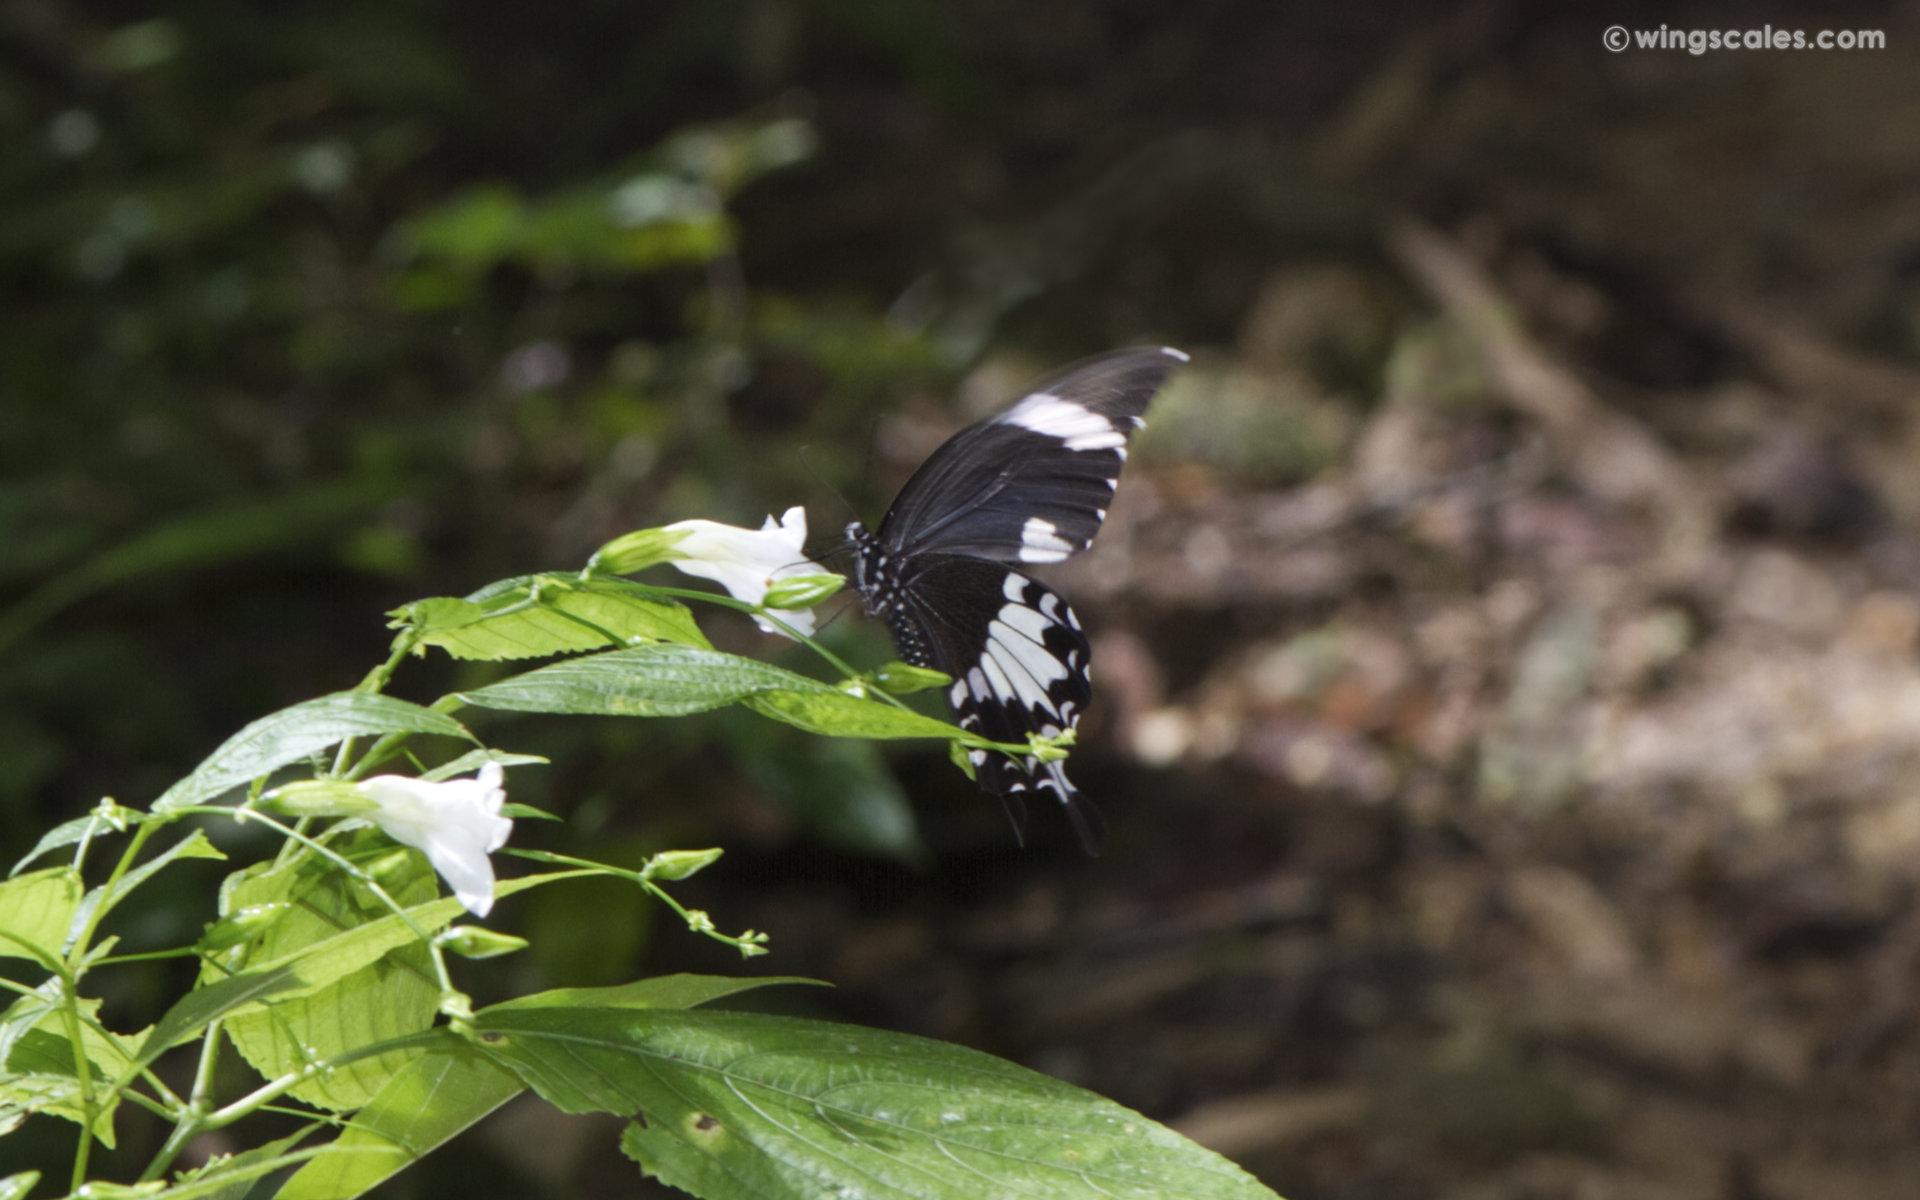 Papilio nephelus sunatus : N/A / N/A